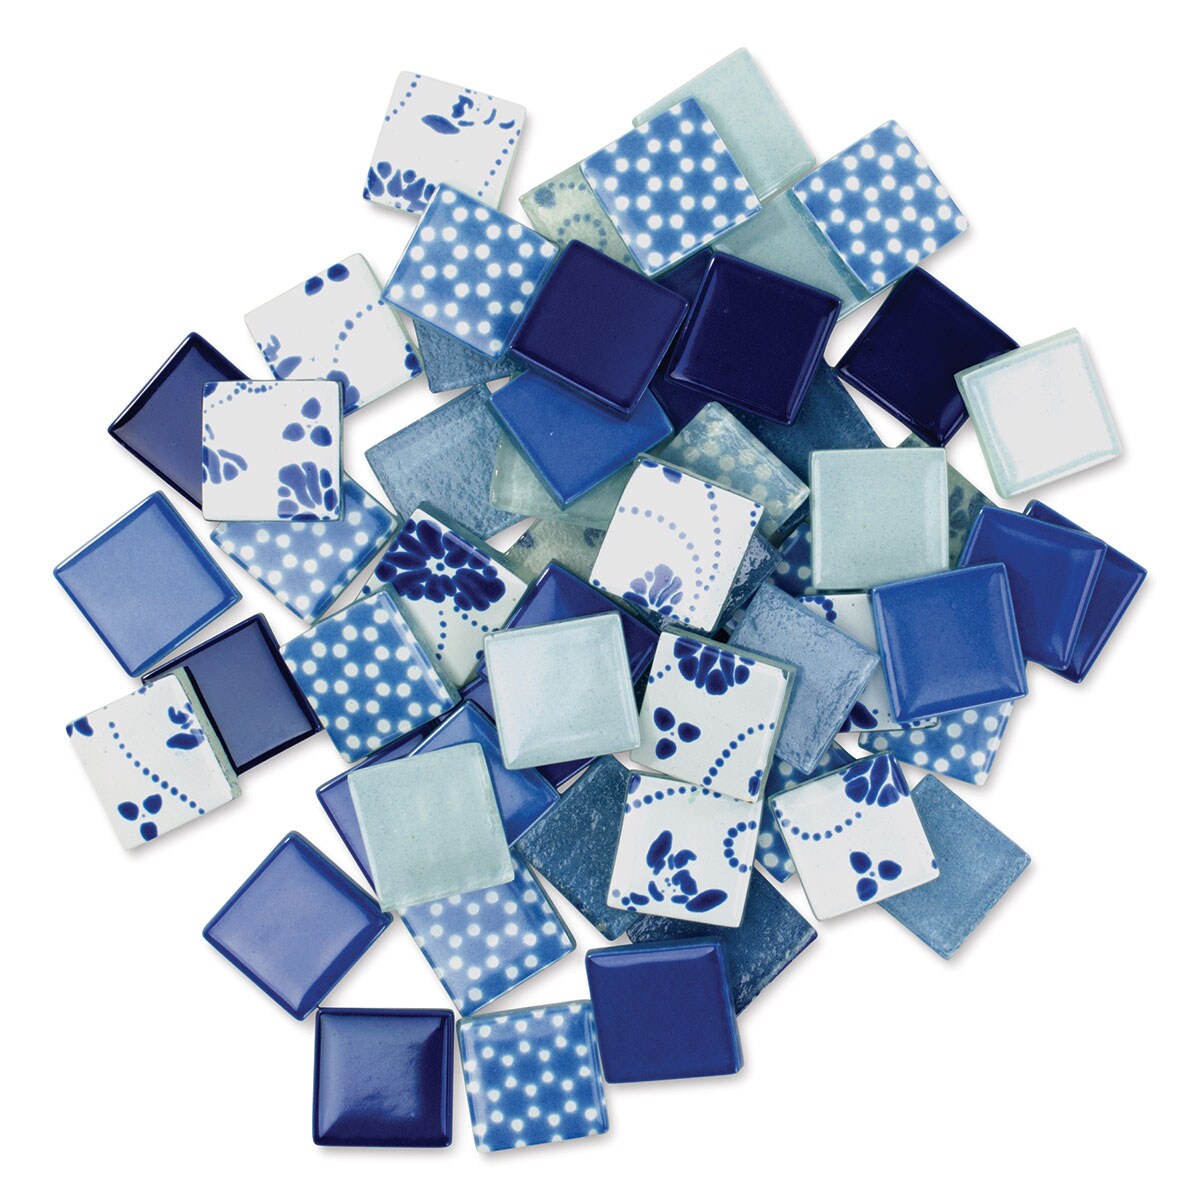 Mosaic Mercantile Patchwork Tiles - Royal/Ocean Blue, 3 lb